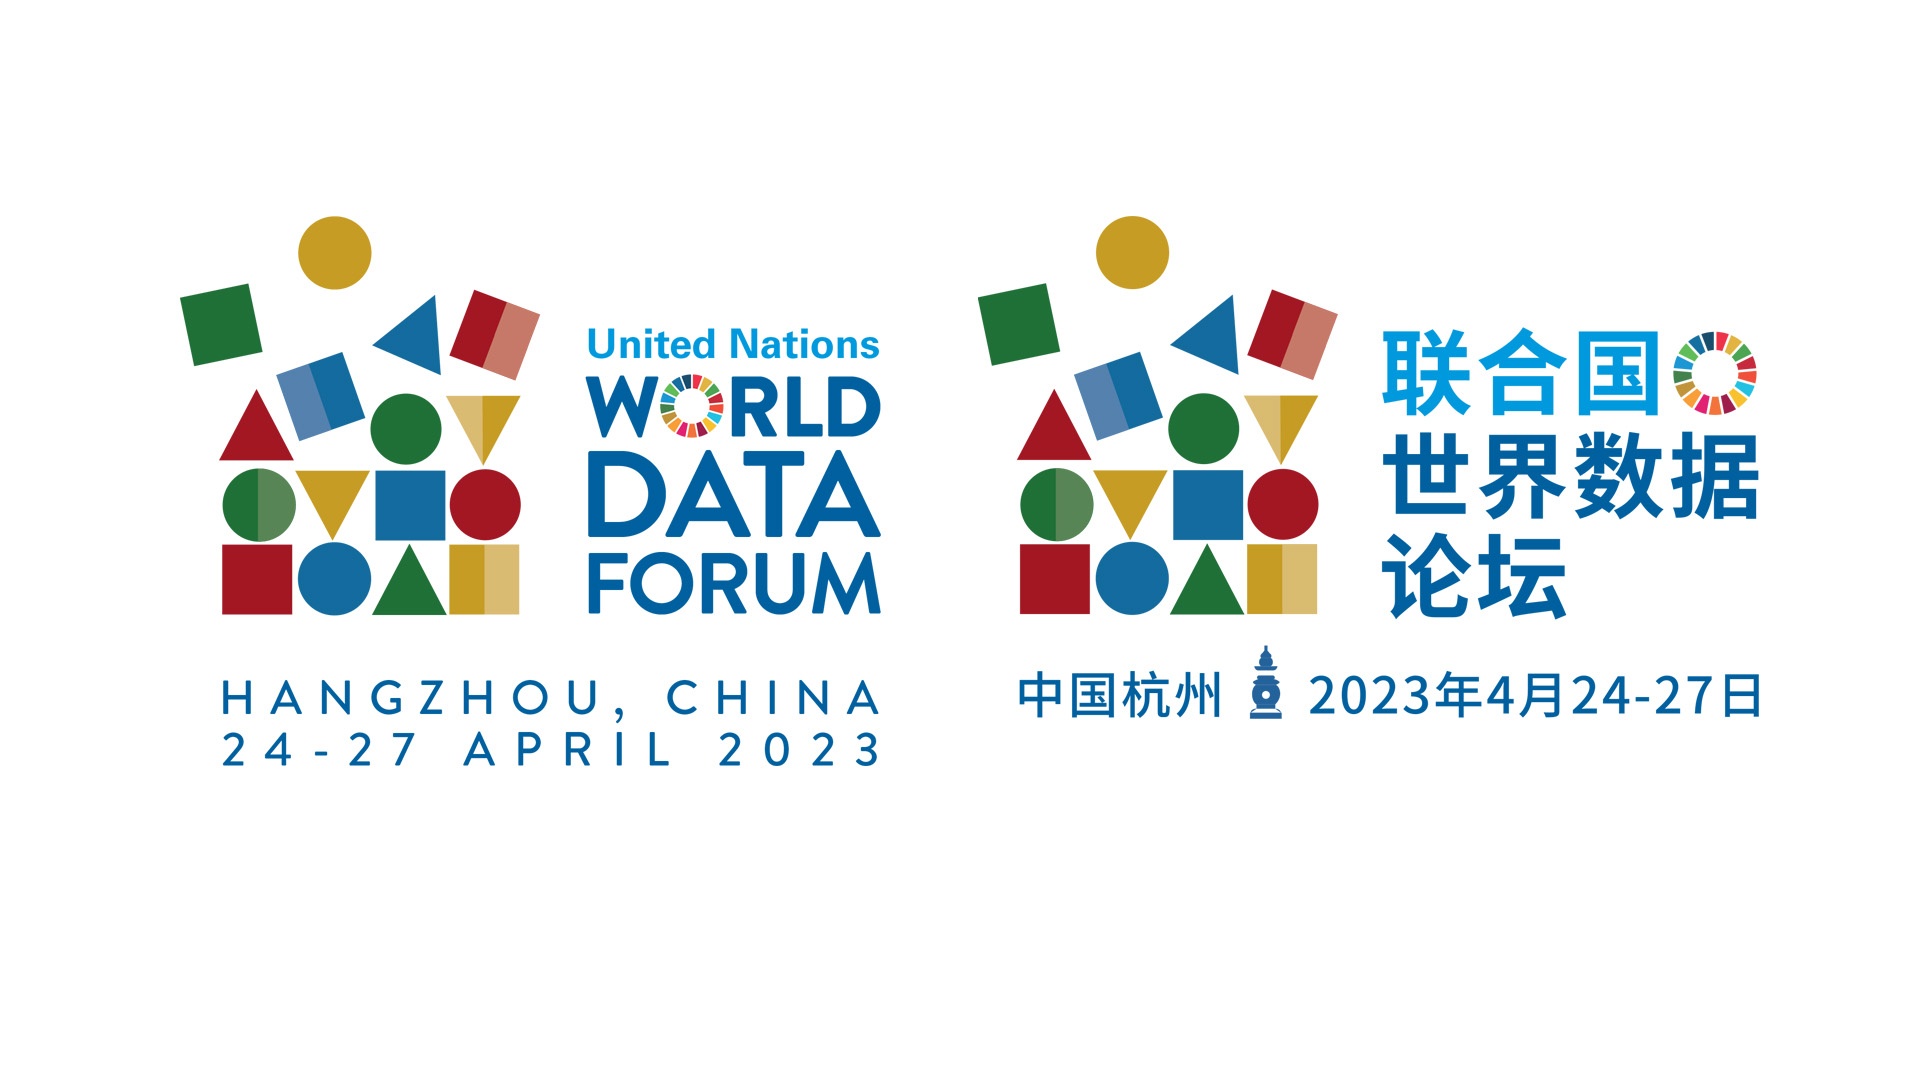 United Nations World Data Forum